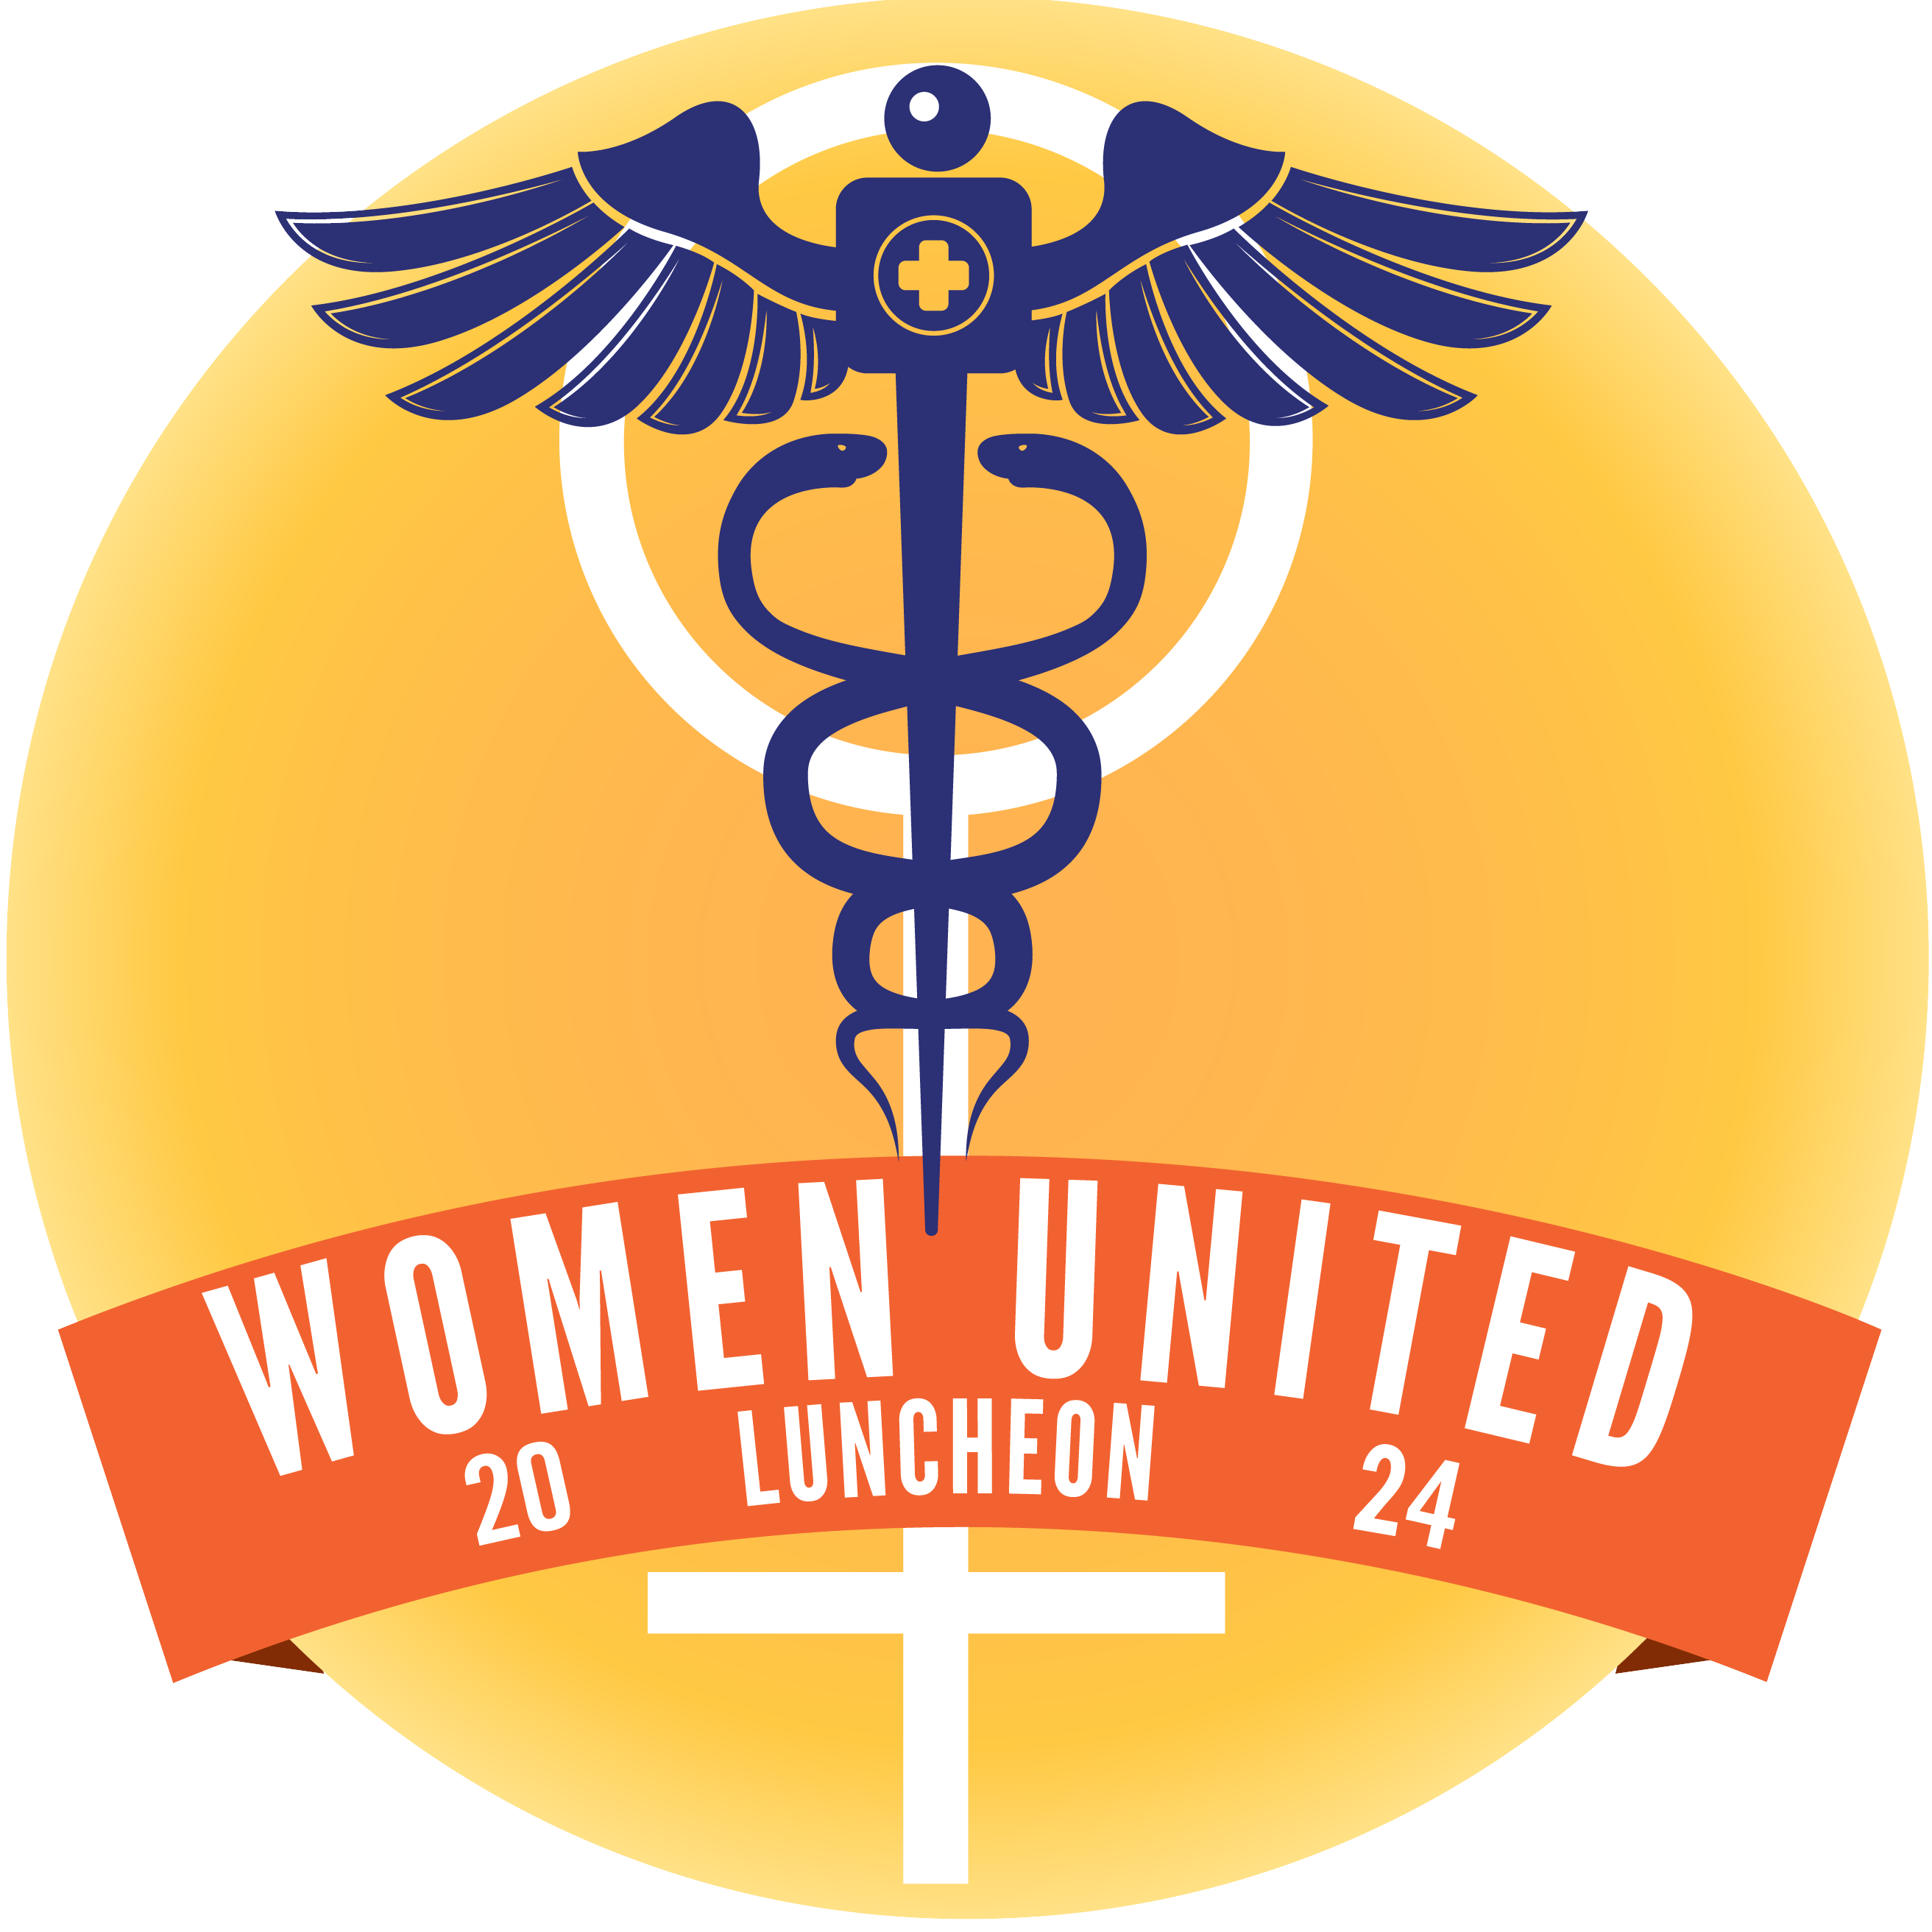 Women United Luncheon